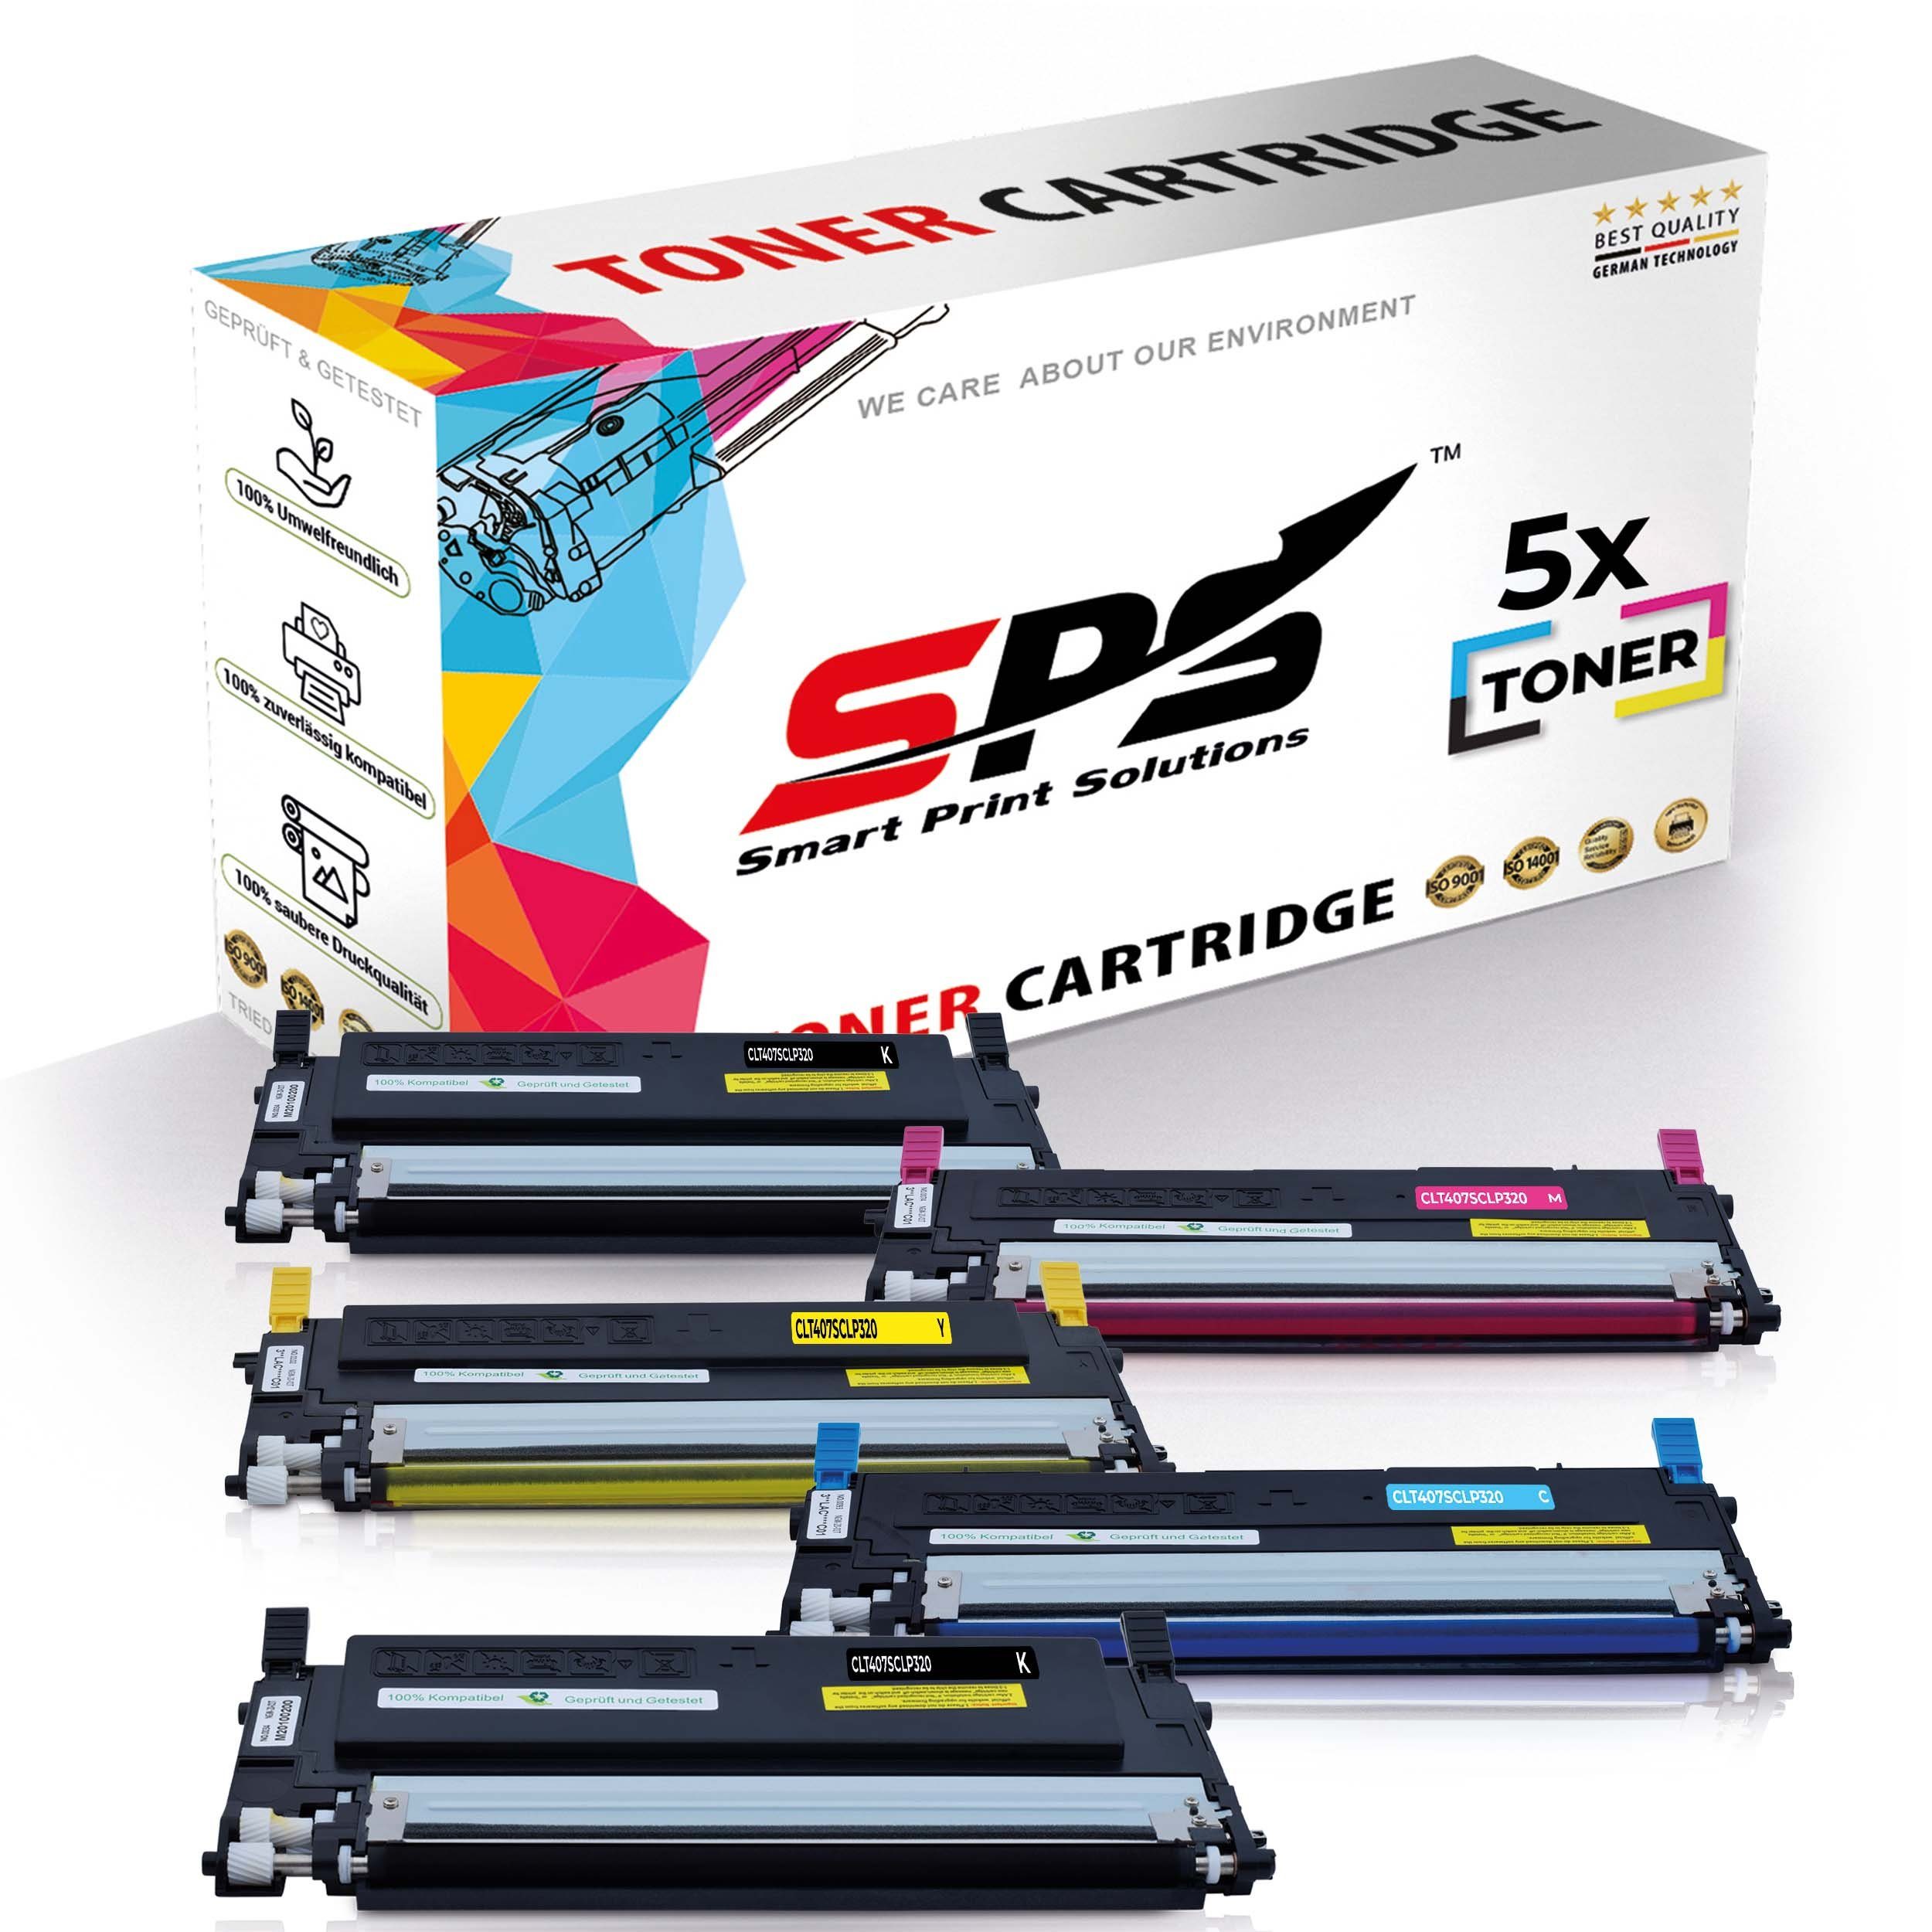 SPS Tonerkartusche 5x Multipack Set Kompatibel für Samsung CLX 3185, (5er Pack, 5x Toner)